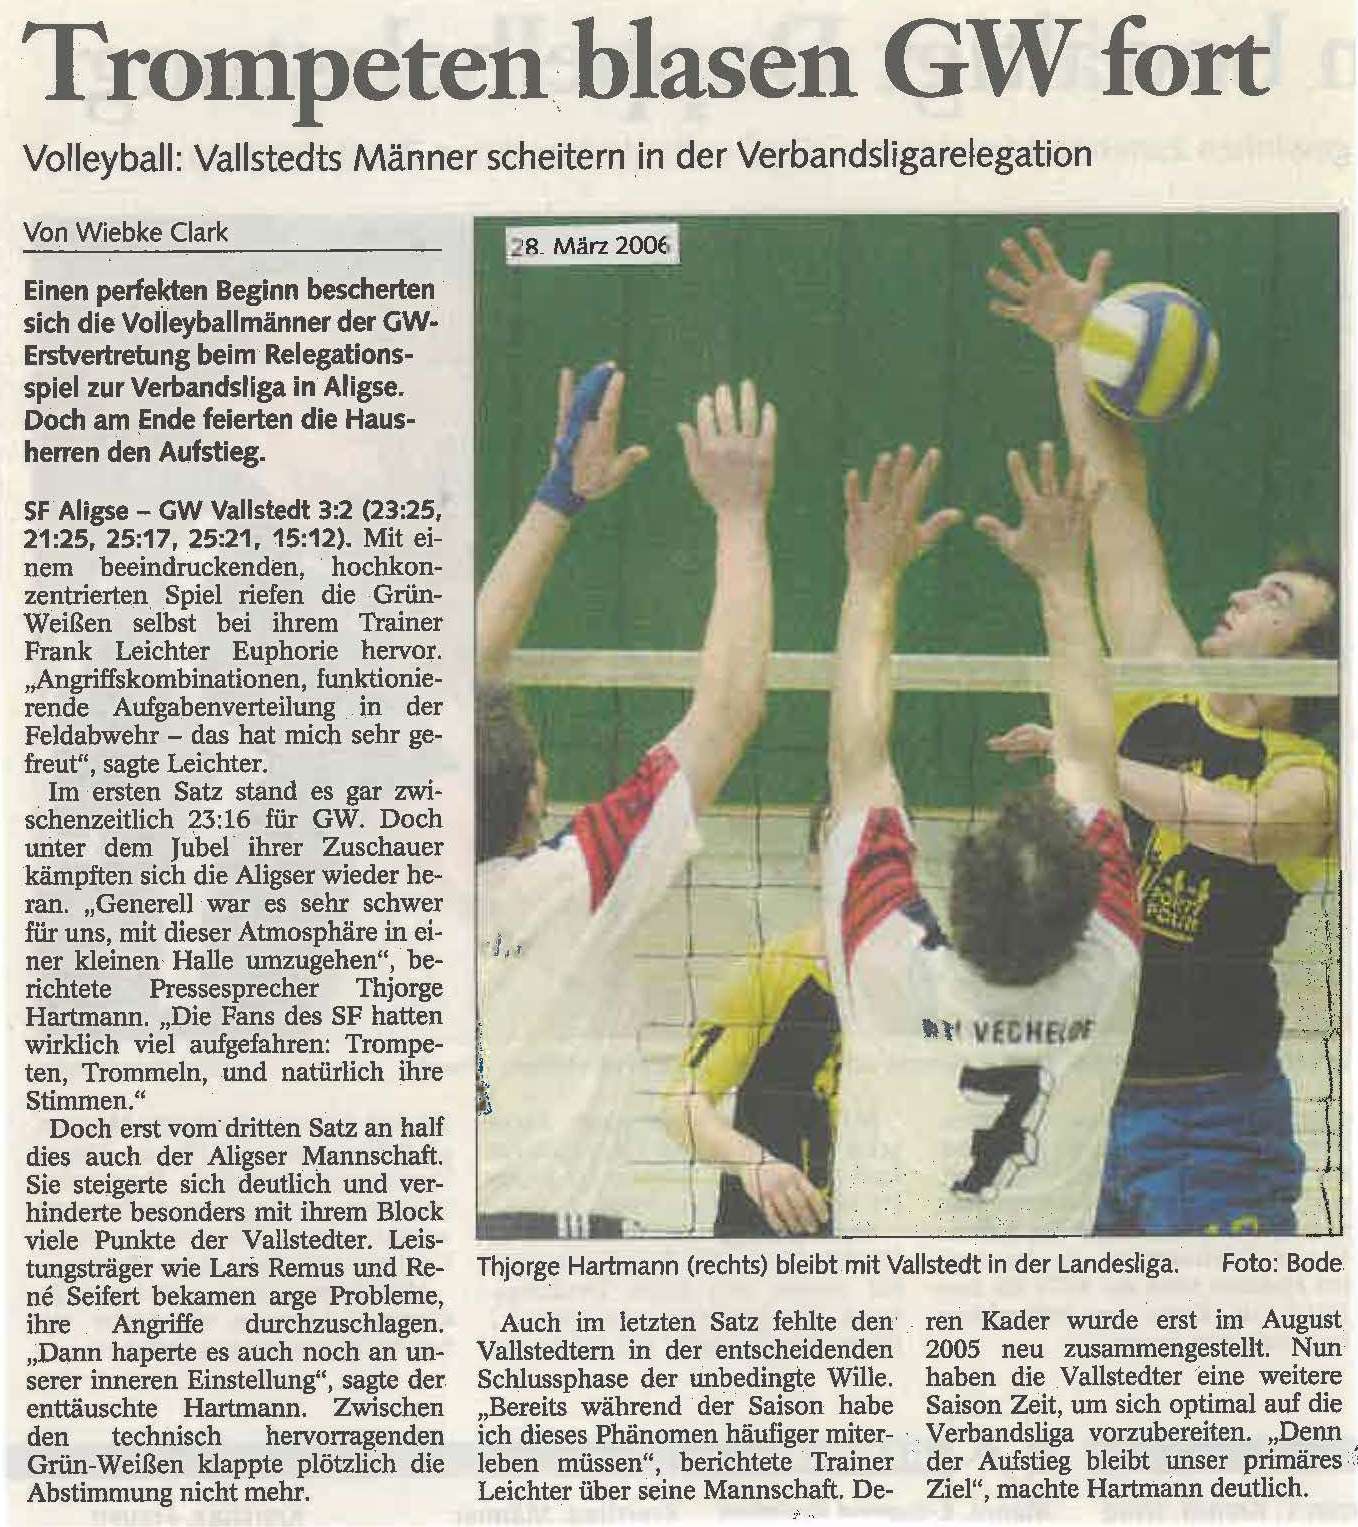 28.03.2006 Relegation Verbandsliga 1. Herren